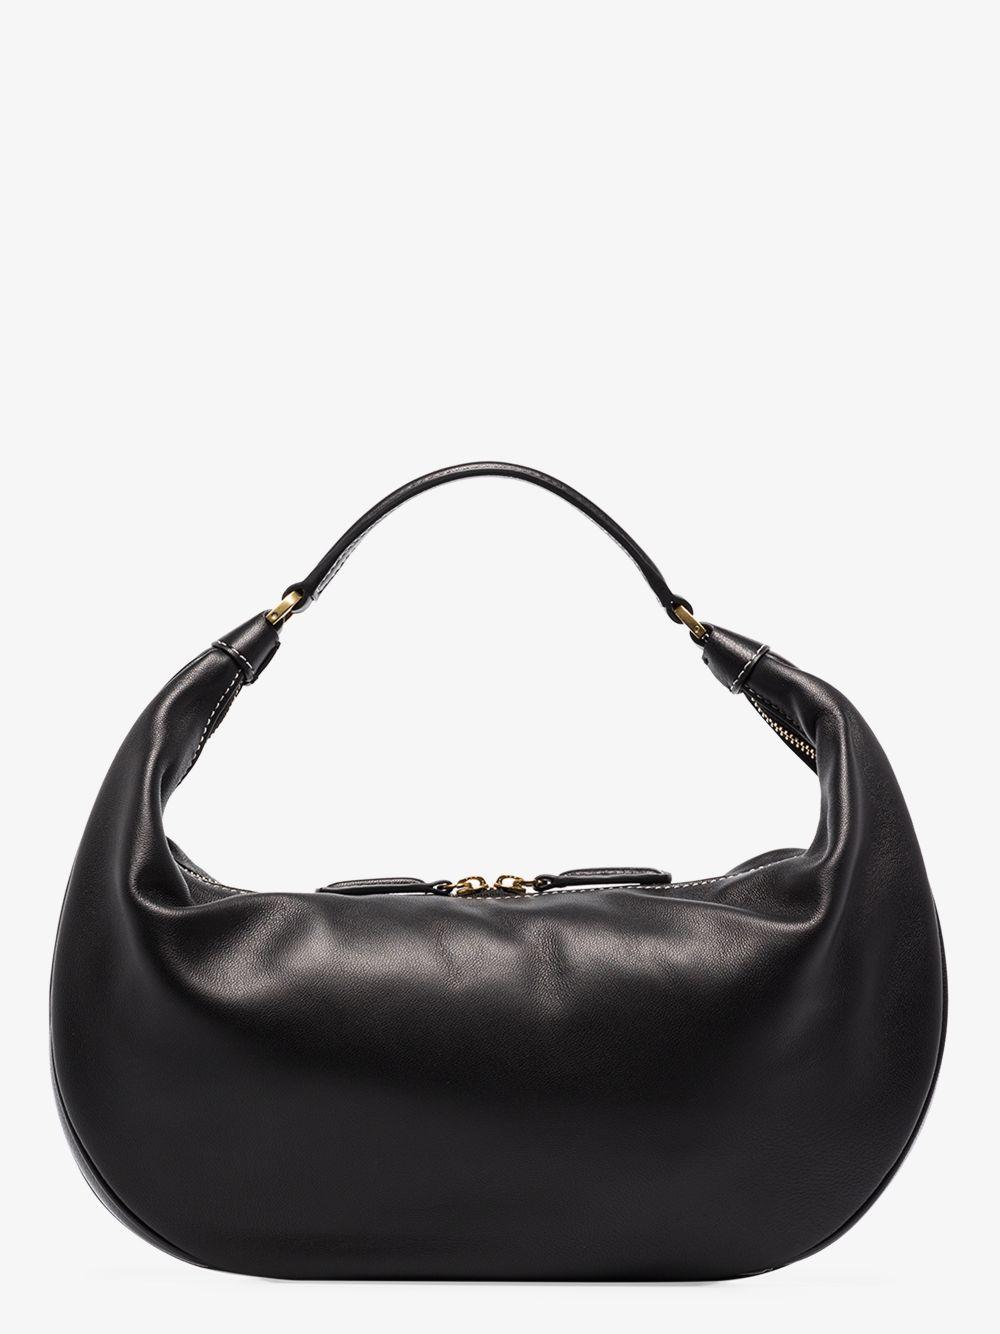 Staud Black Sasha Slouchy Leather Shoulder Bag